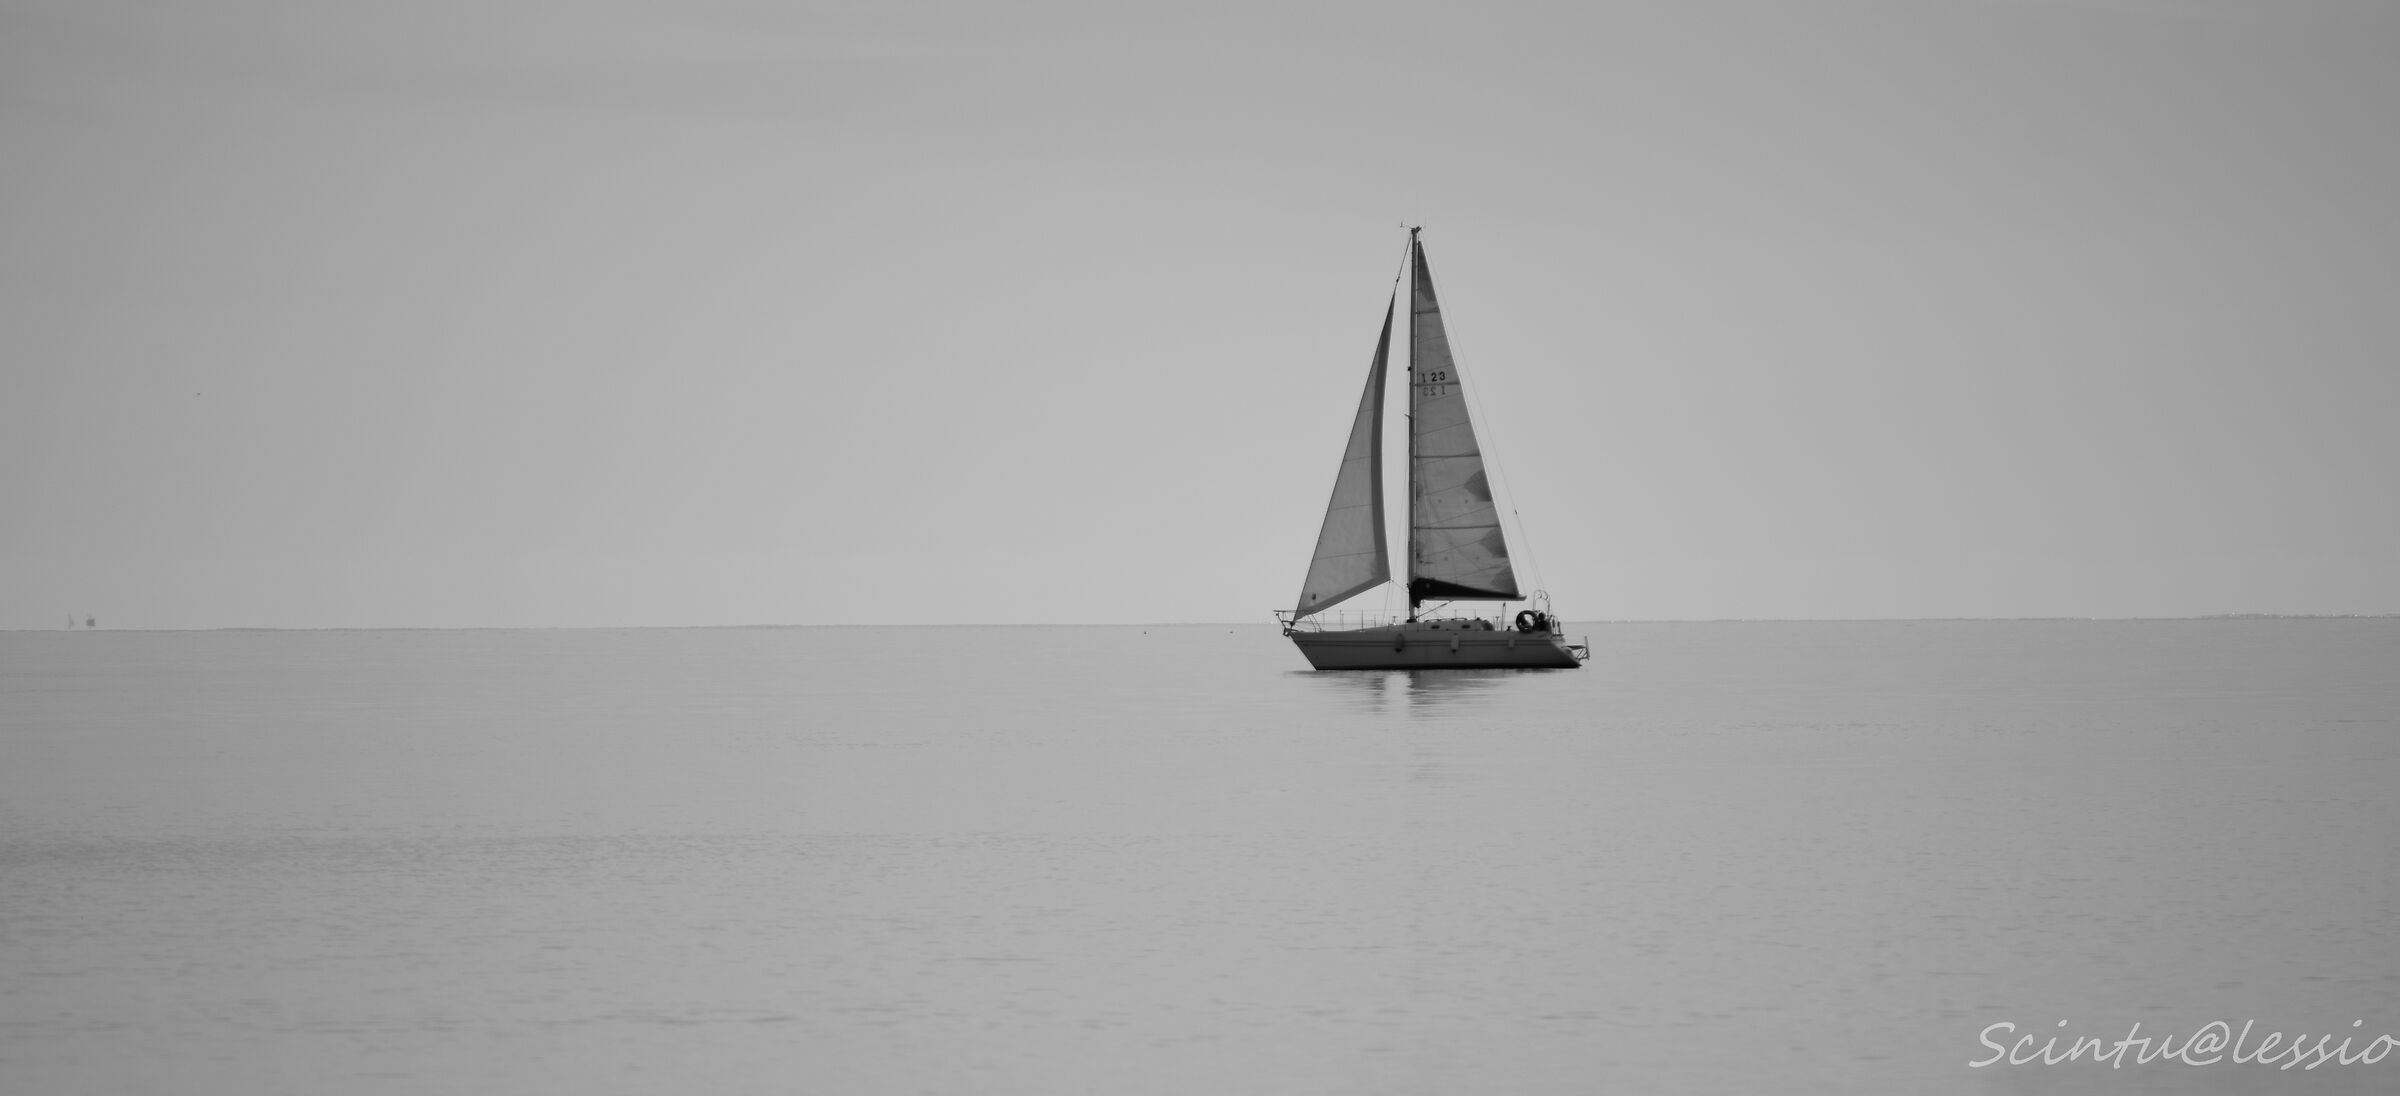 Sea in Black and White...